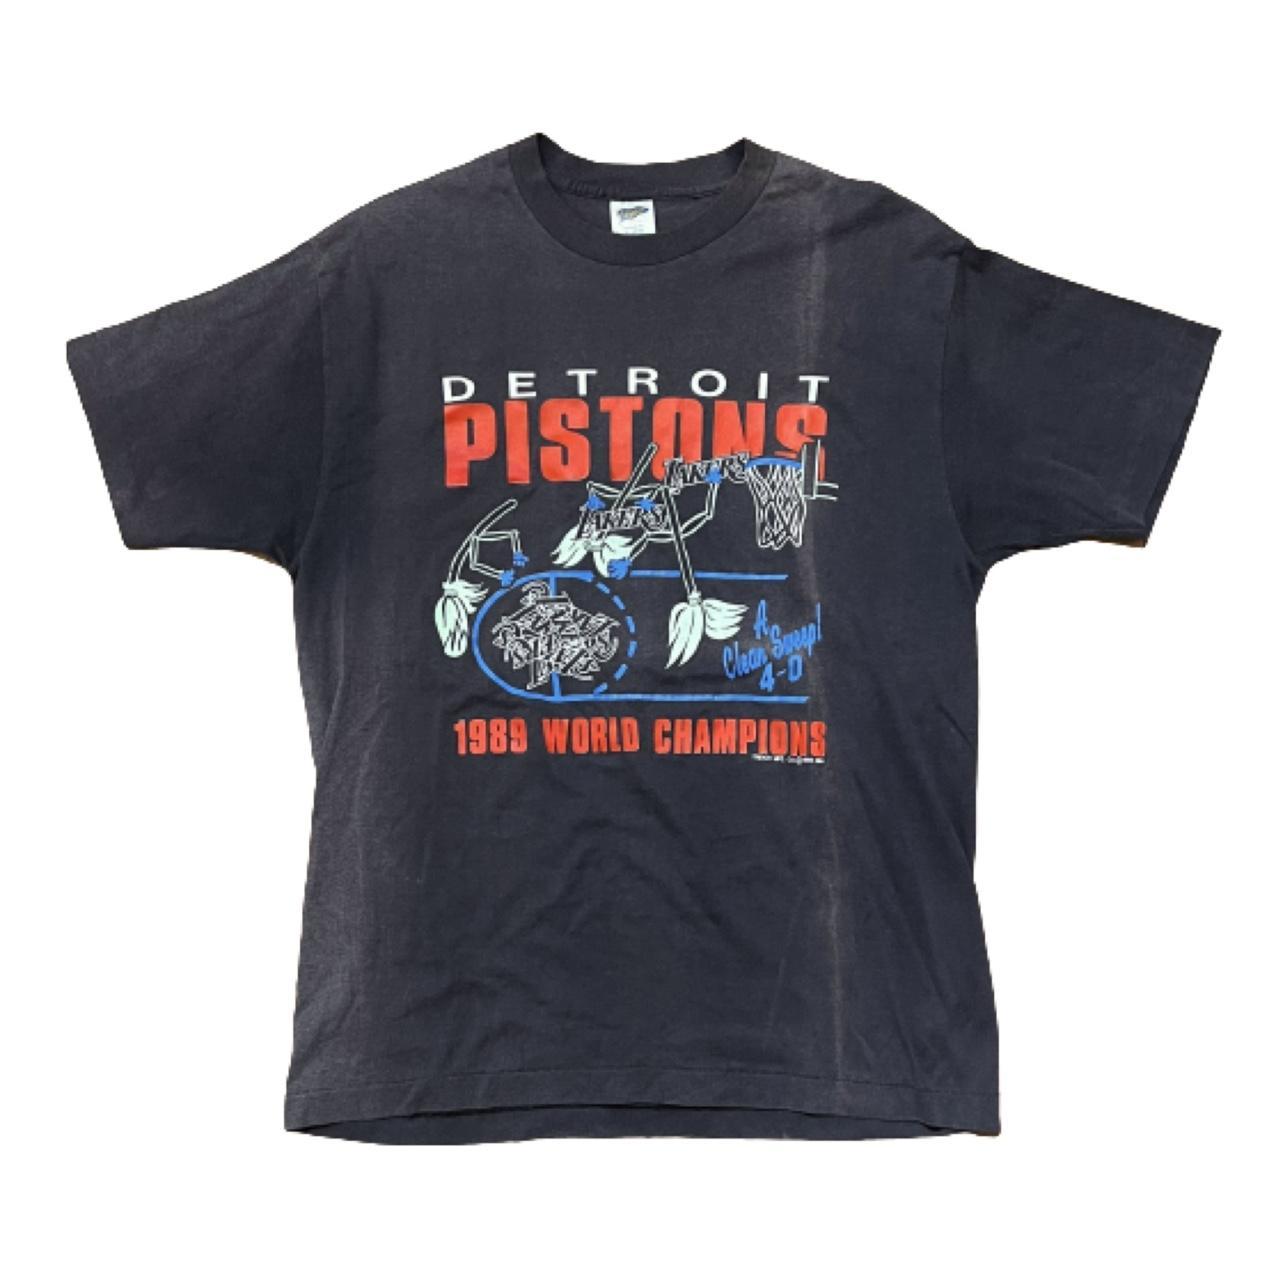 1989 pistons championship shirt